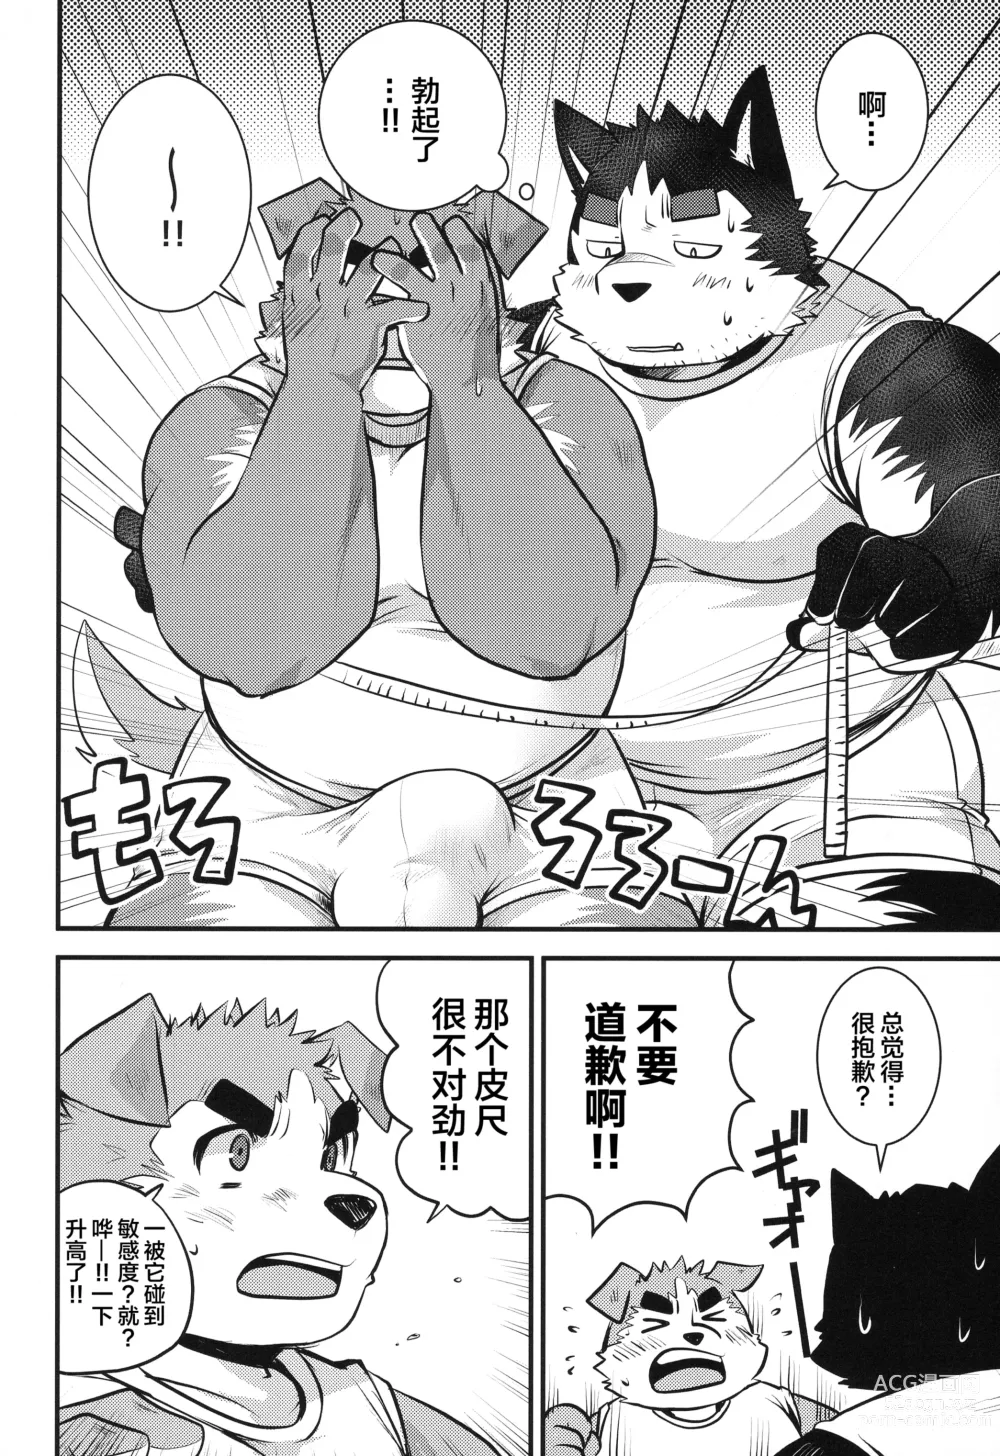 Page 16 of doujinshi Eccentric Shintai Kensa